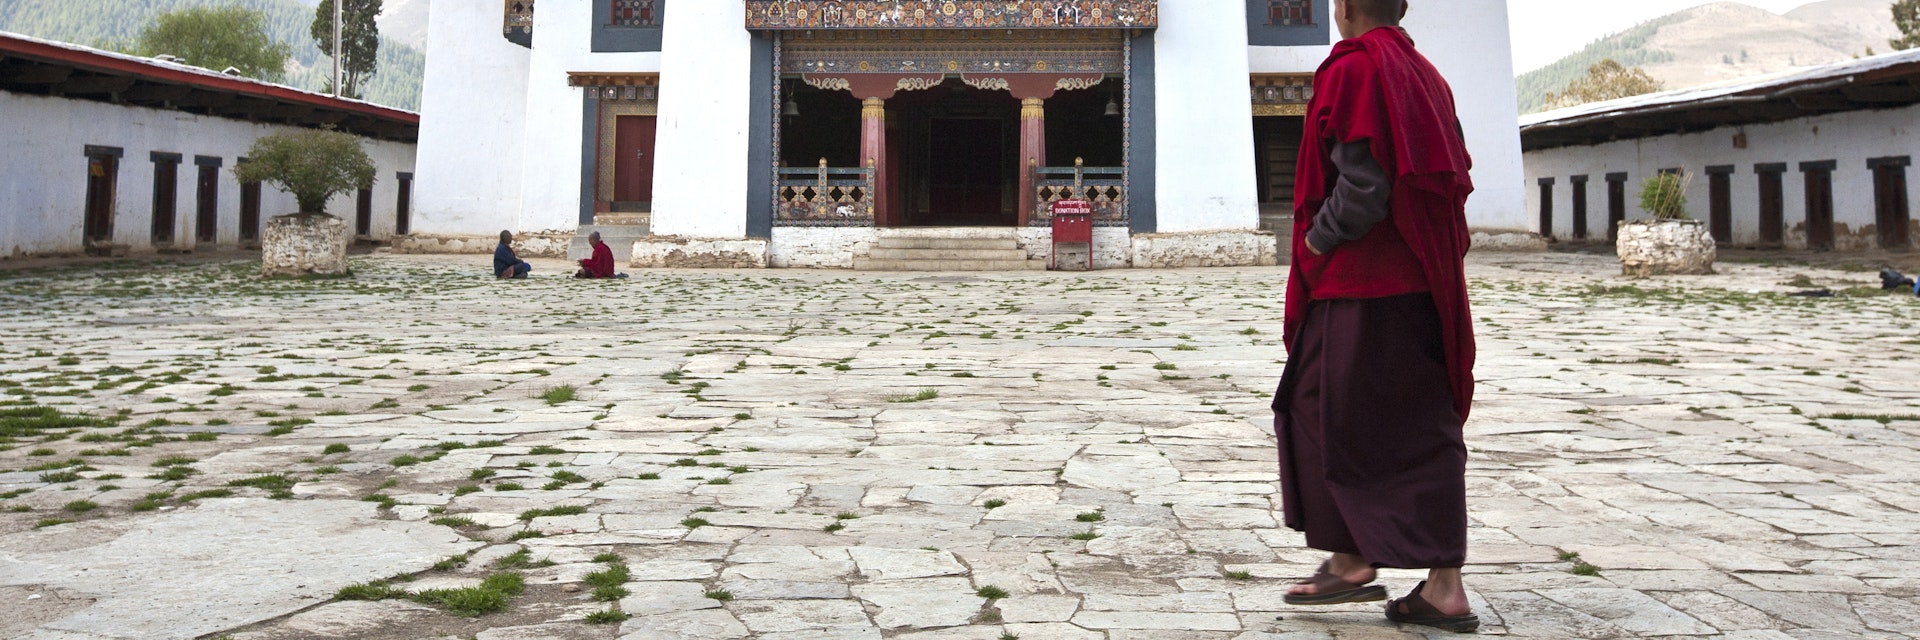 Gangte Goemba (Monastery), Phonbjikha Valley.